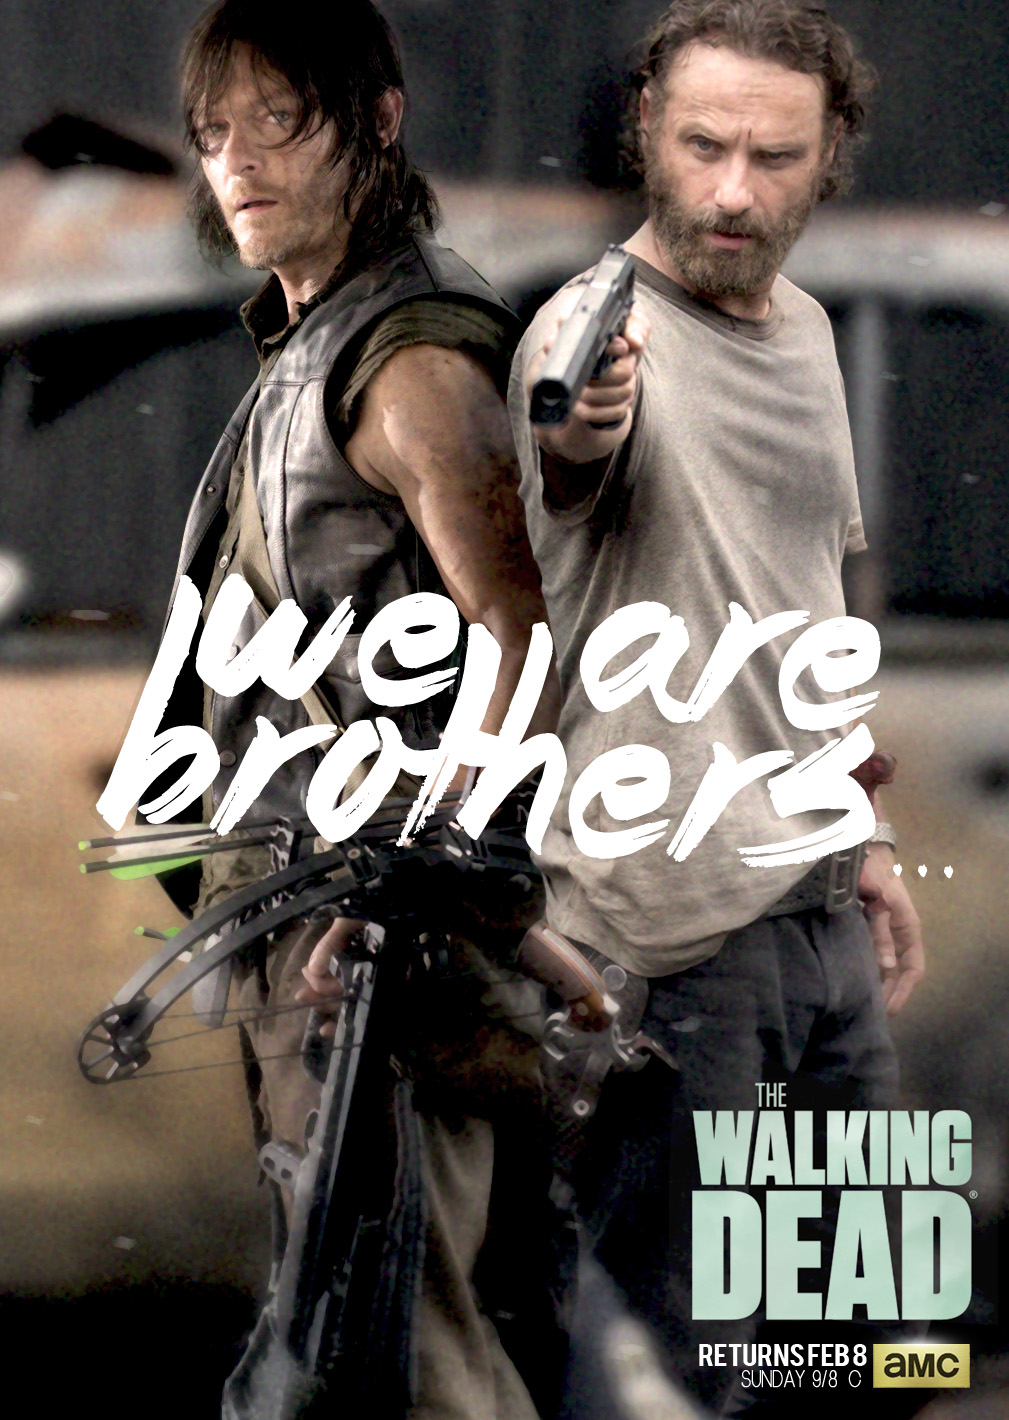 Walking Dead Wallpaper Daryl And Rick - HD Wallpaper 